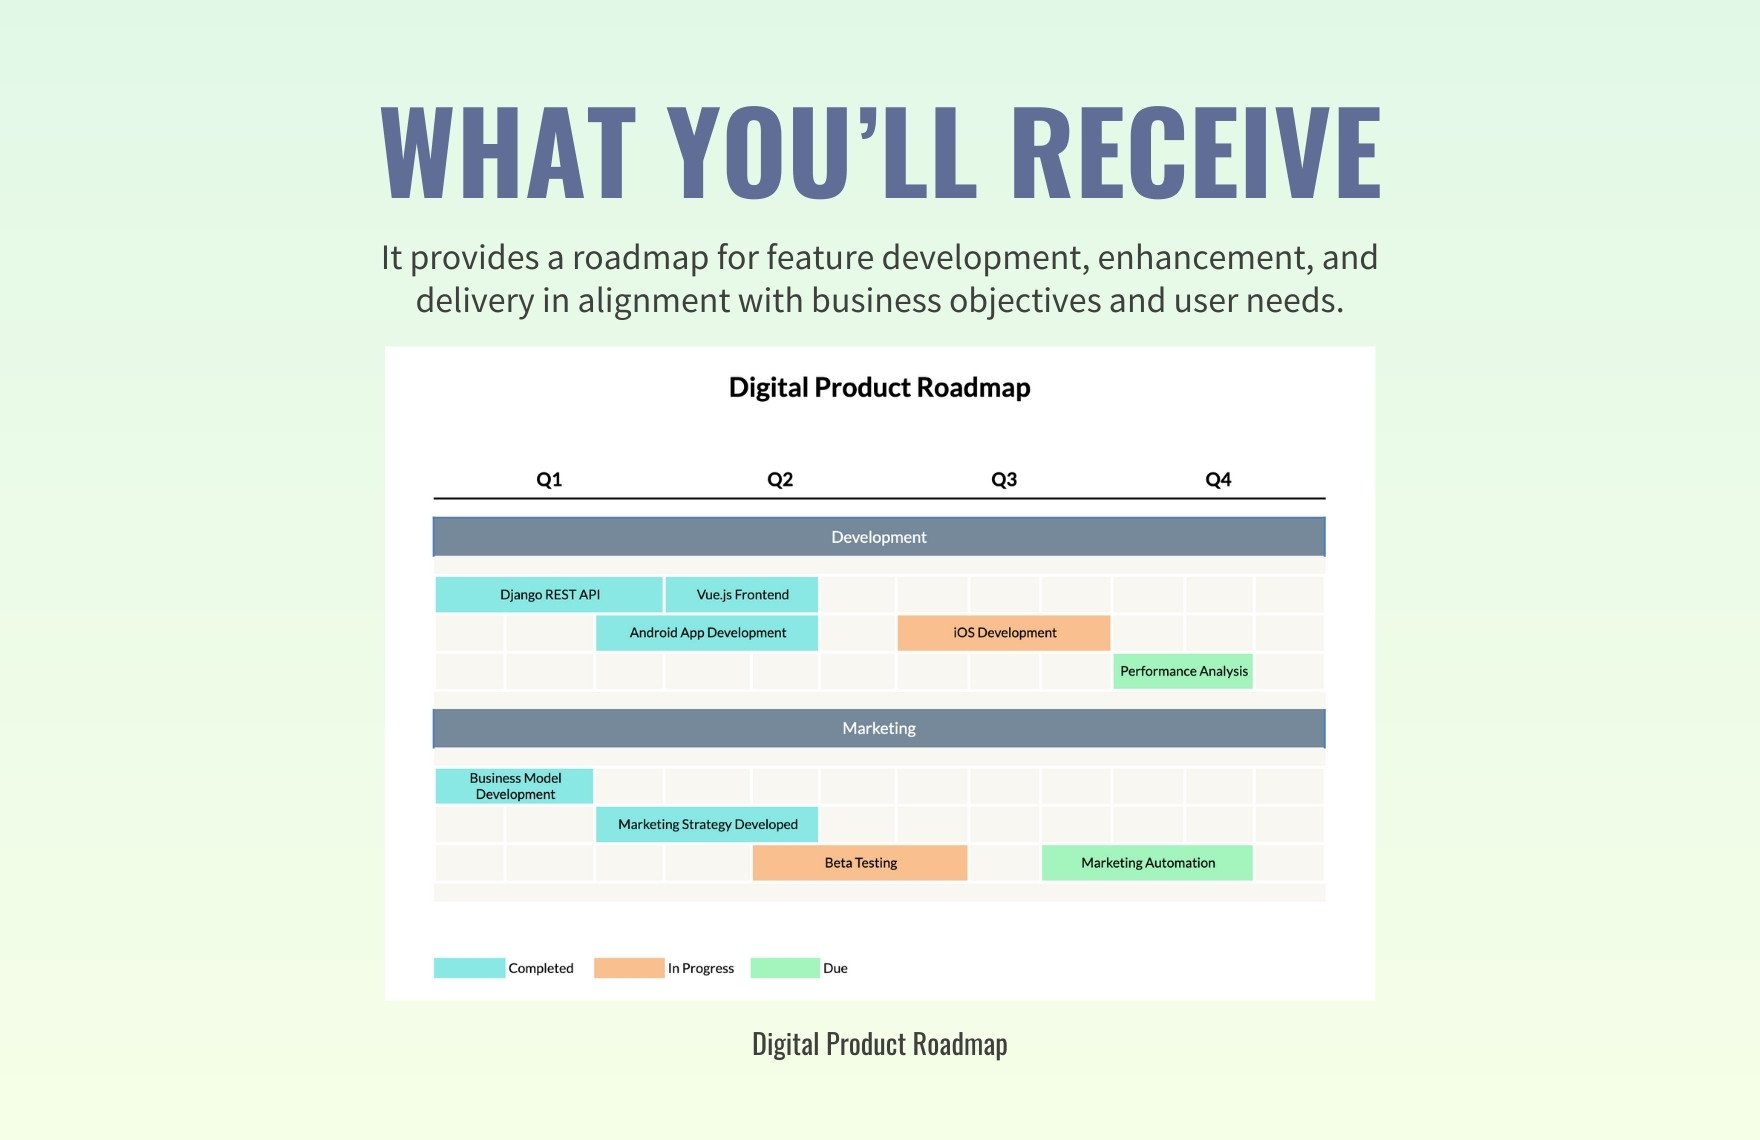 Digital Product Roadmap Template